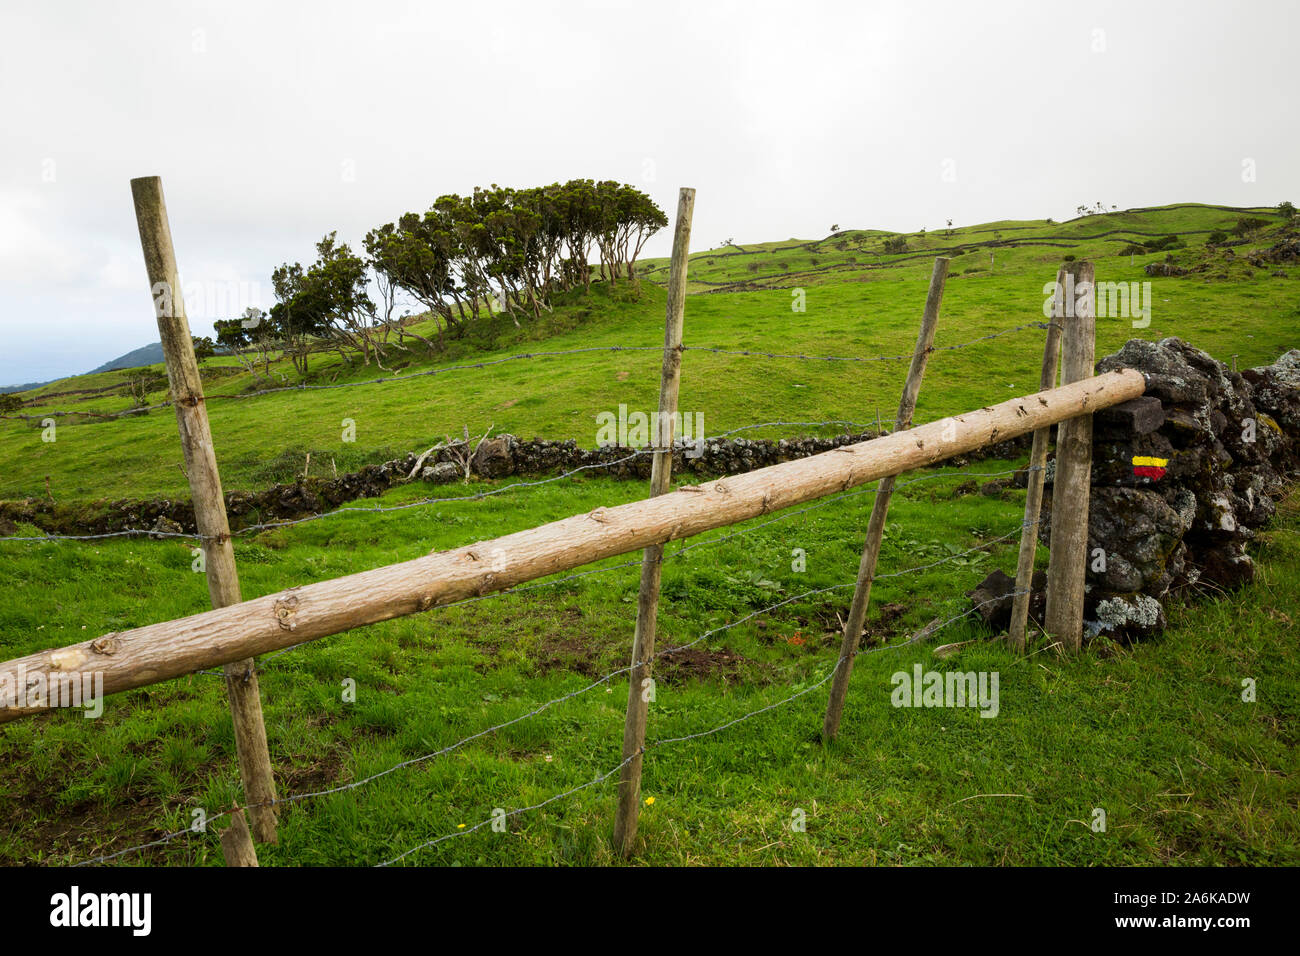 Erica Azorica trees in a green field. Pico, Azores, Portugal Stock Photo